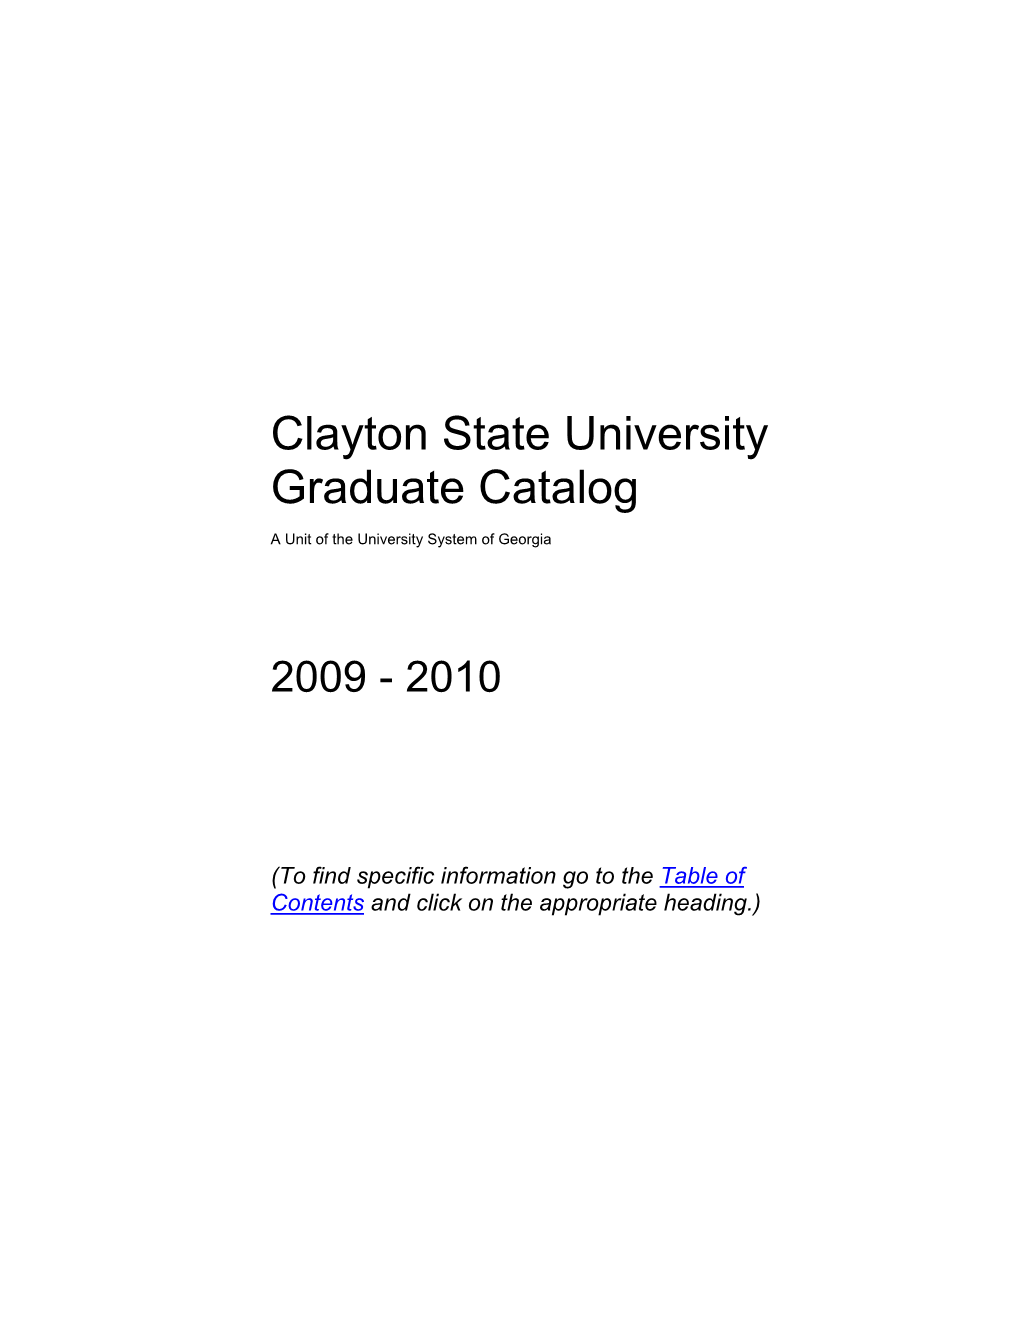 Graduate Catalog 2009-2010